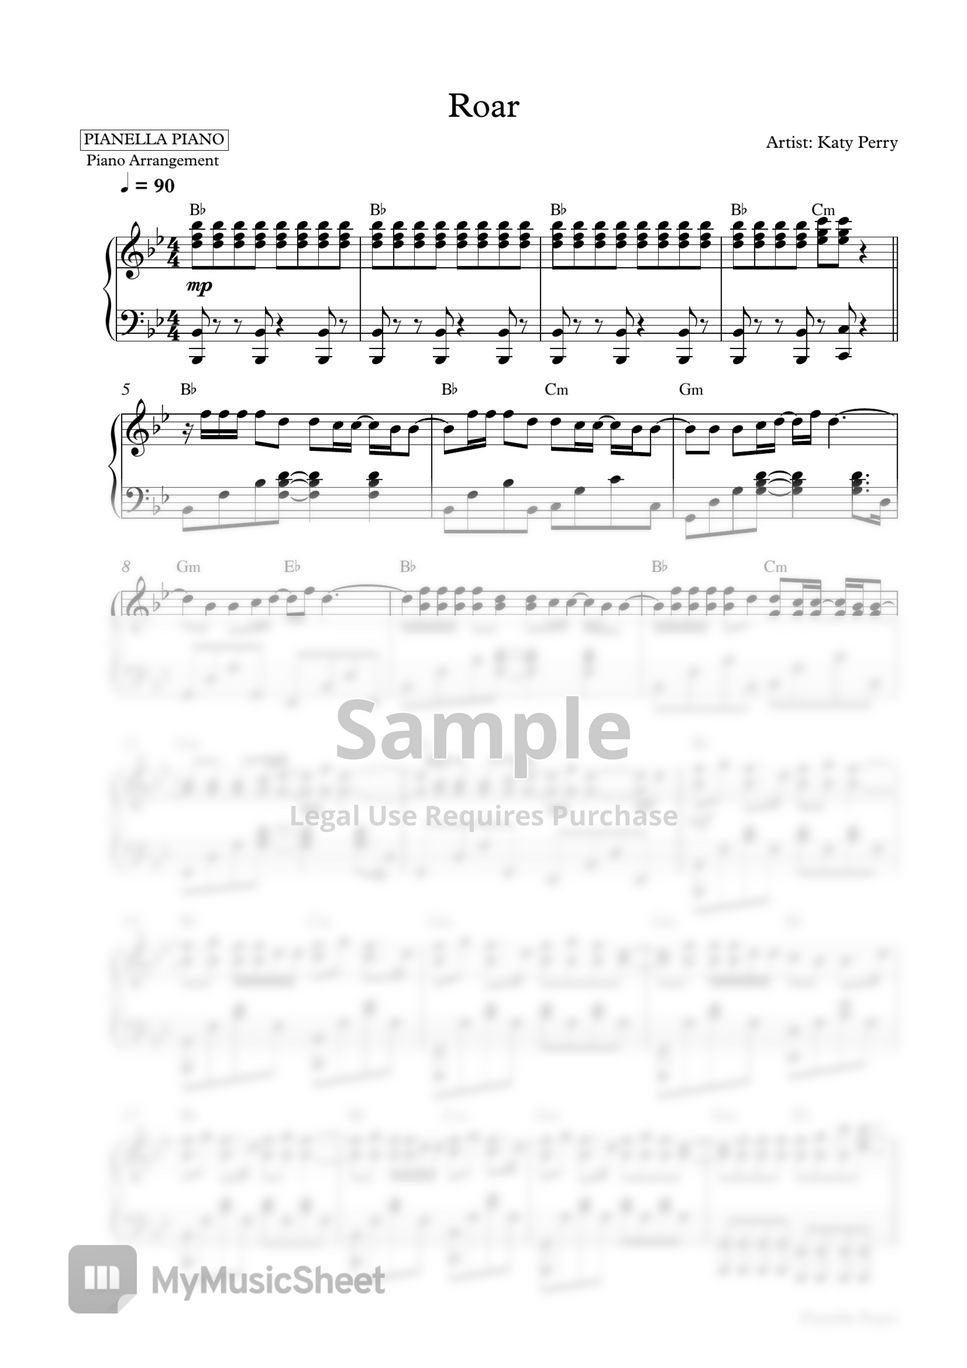 Katy Perry - Roar (Piano Sheet) by Pianella Piano